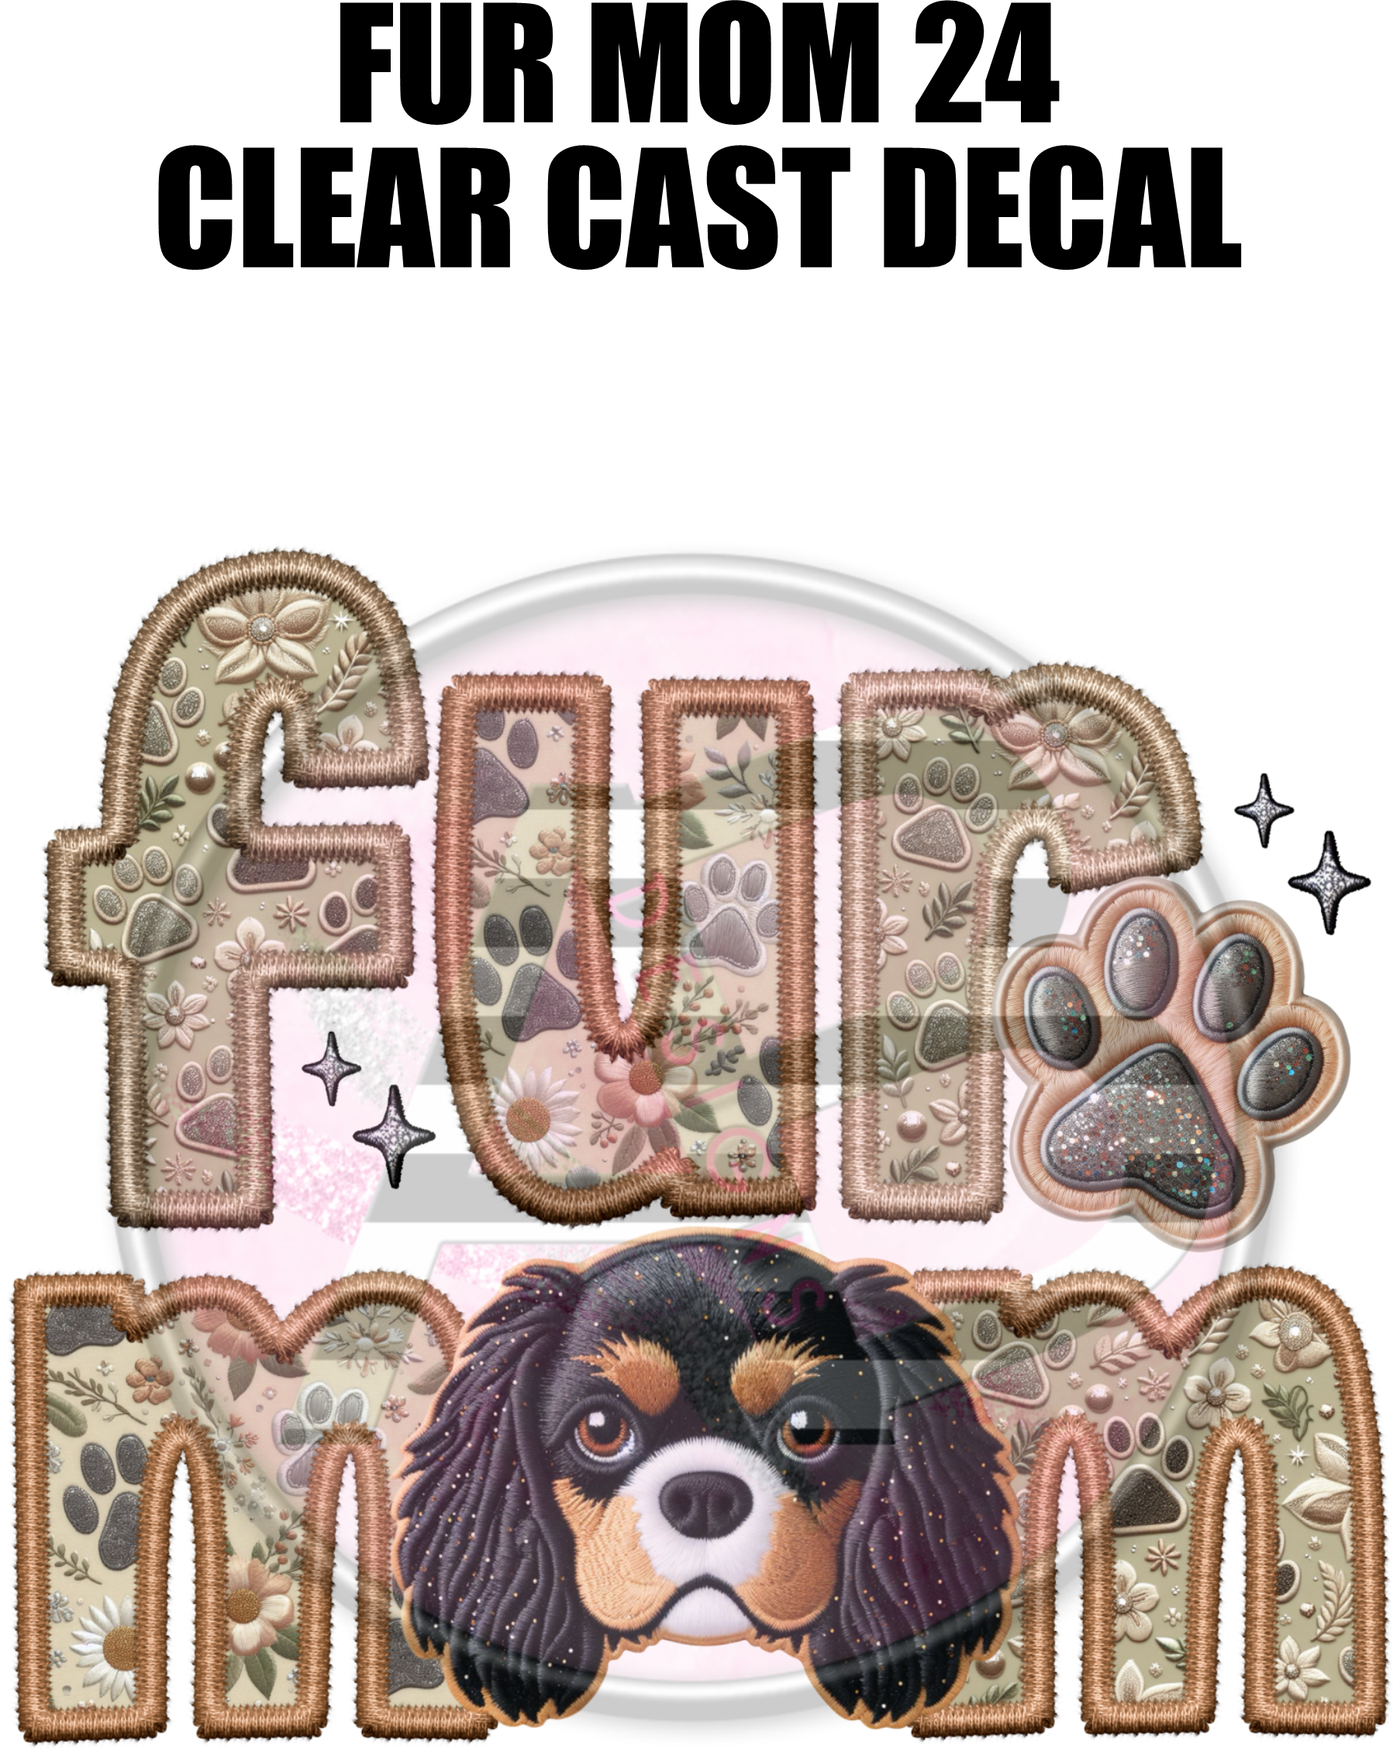 Fur Mom 24 - Clear Cast Decal